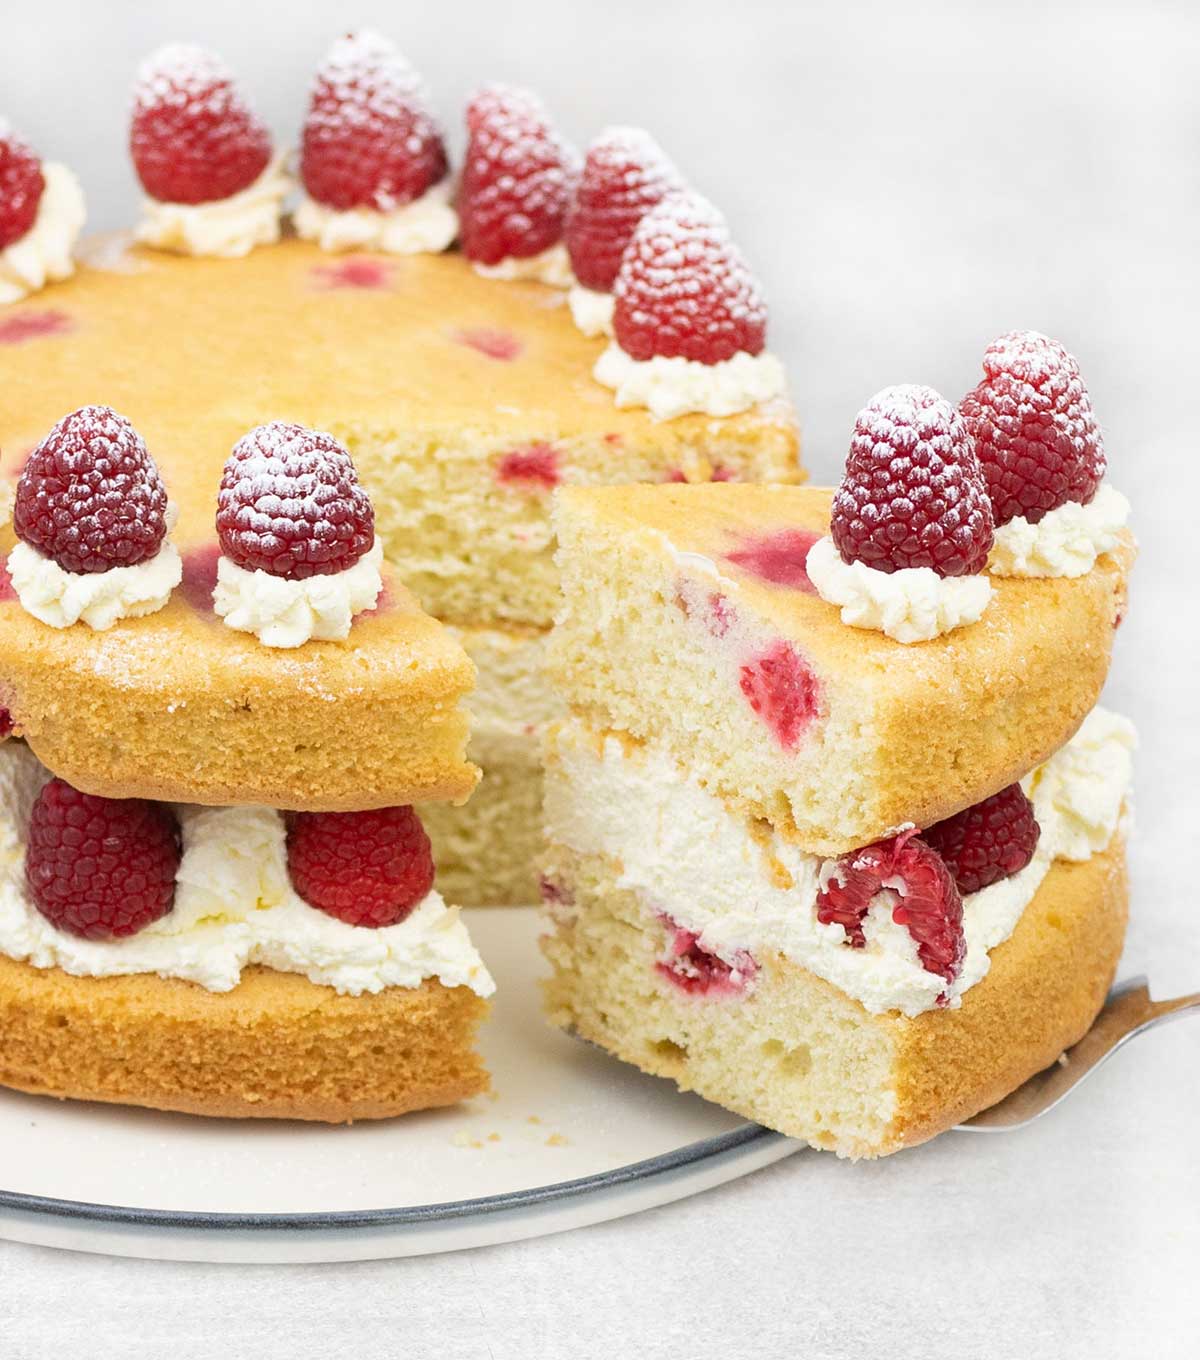 Cut the raspberry sponge cake.